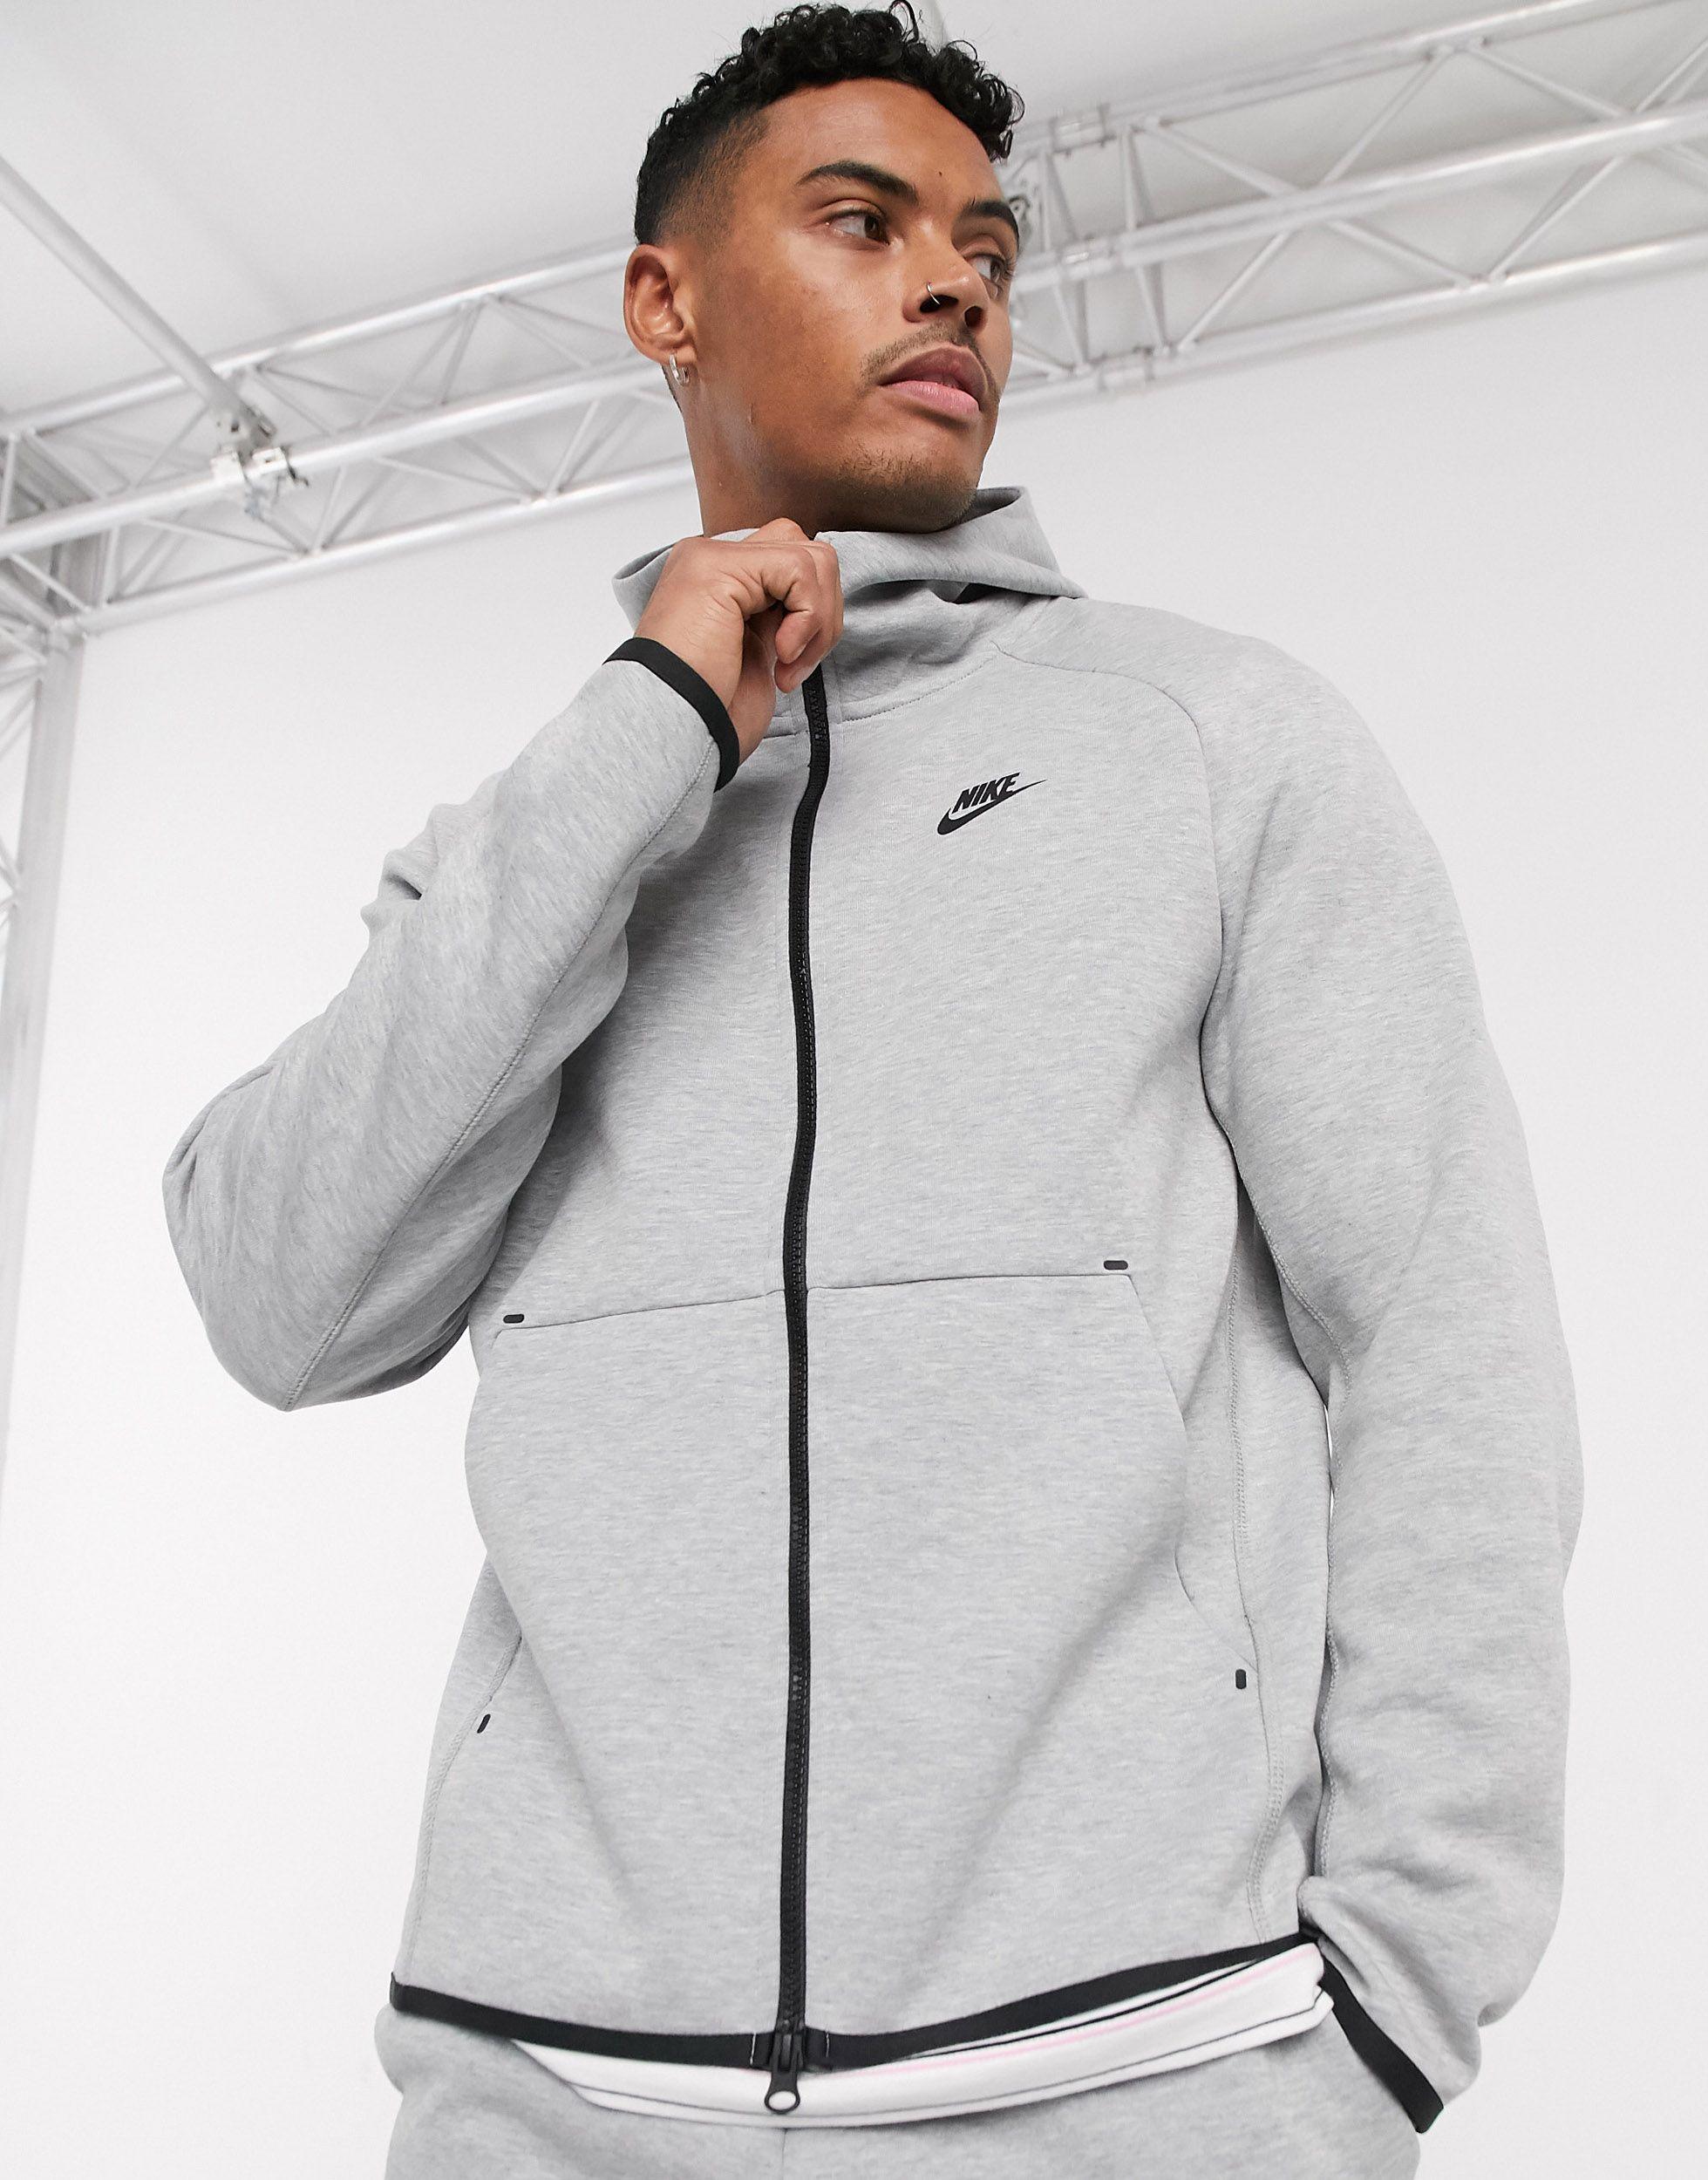 Nike Tech Fleece Full-zip Hoodie in Dark Grey Heather/Black/White (Gray)  for Men - Lyst